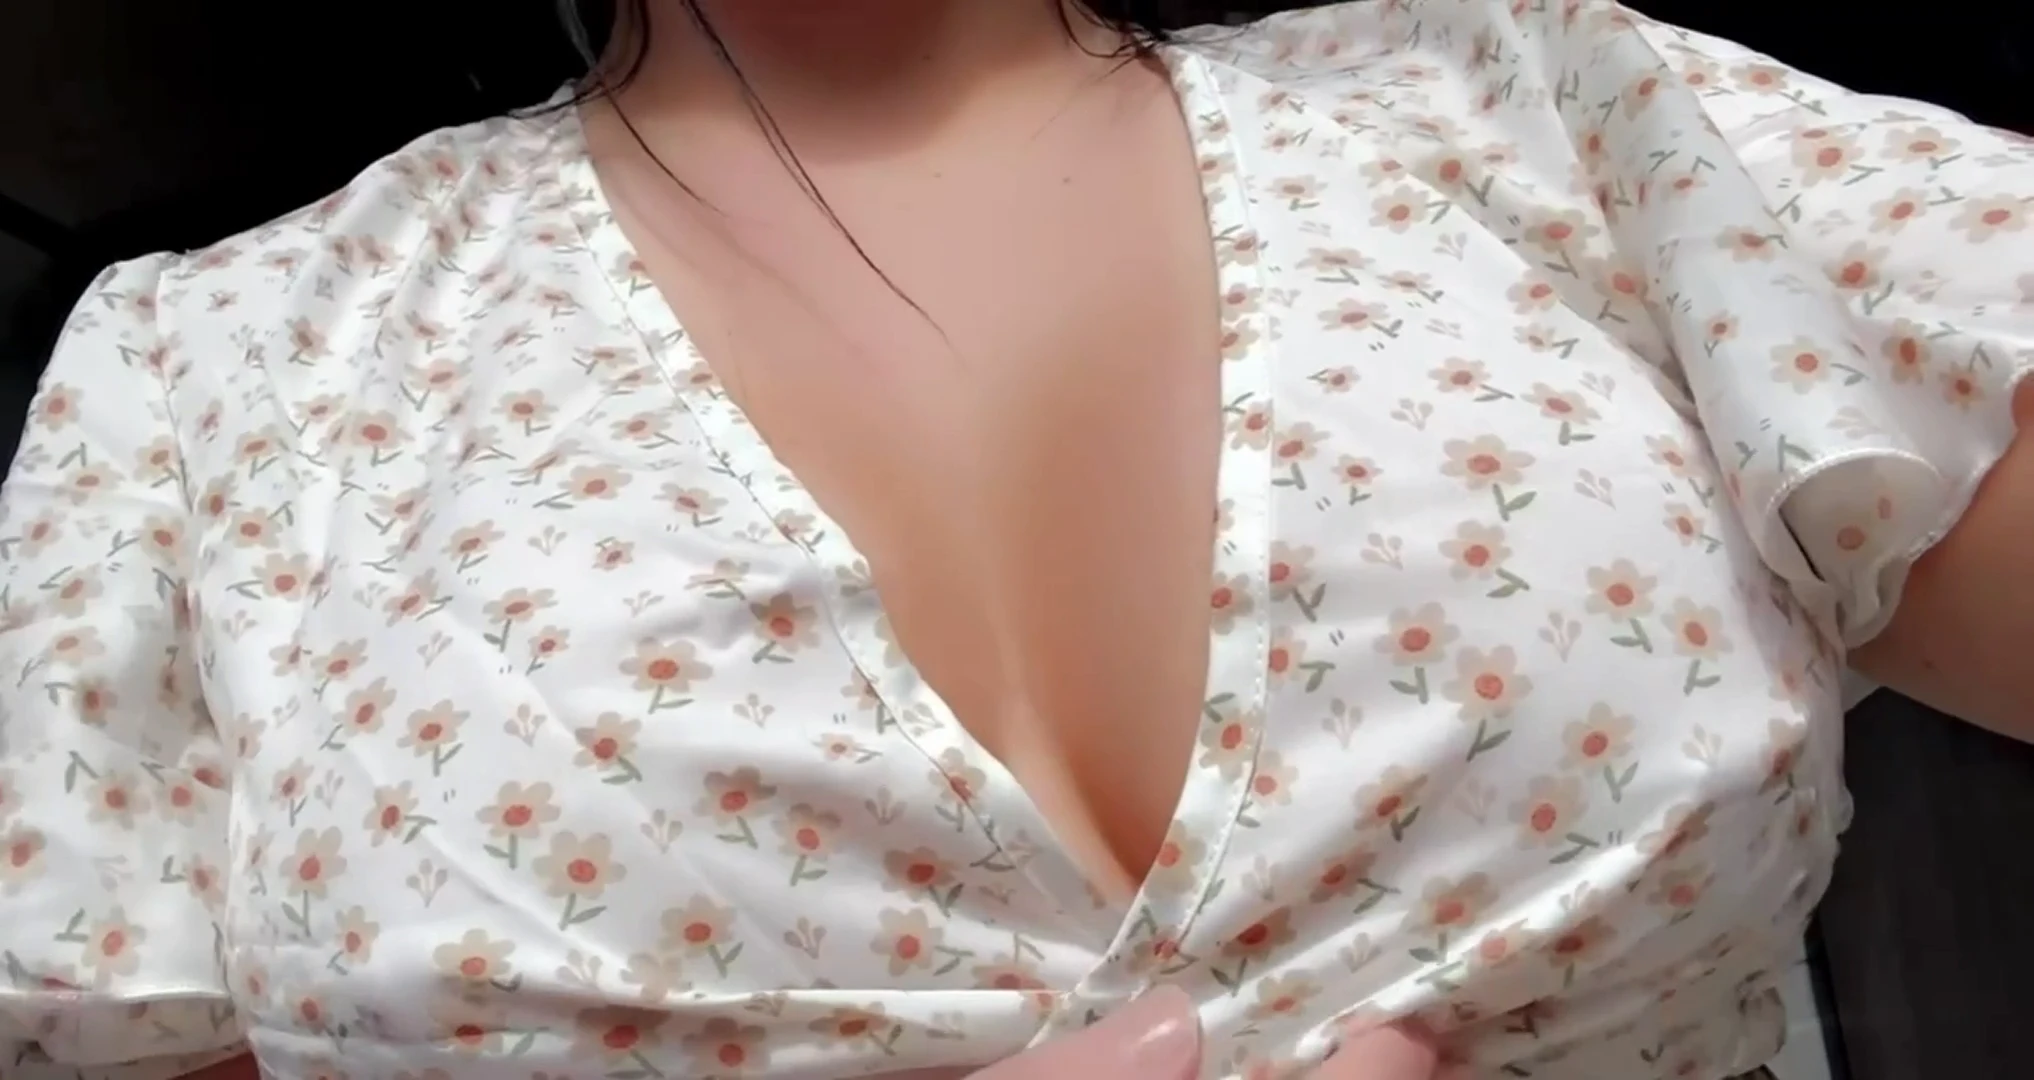 Big titty reveal 🙈 [OC]